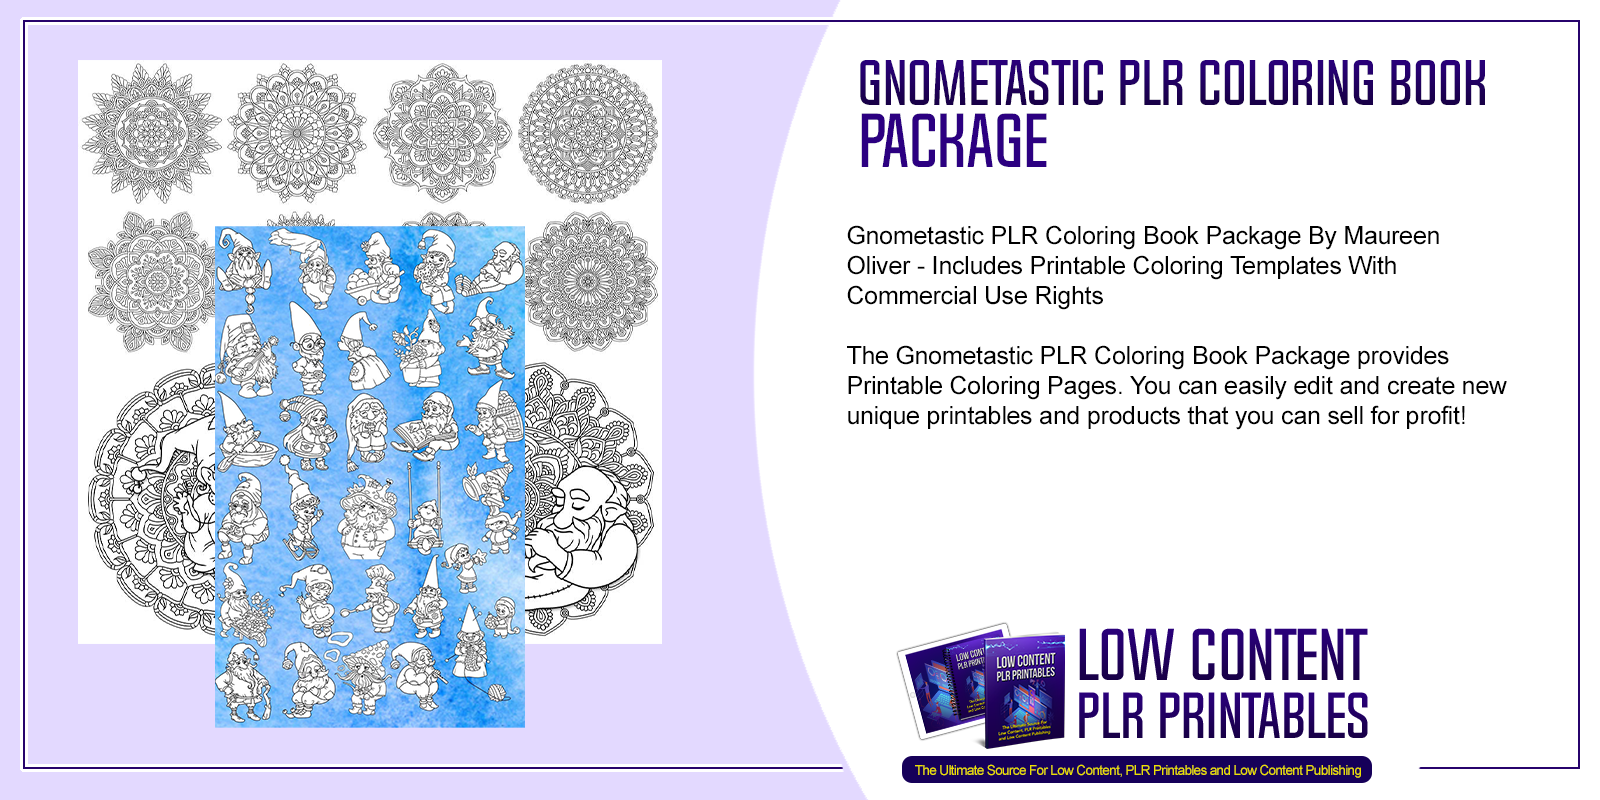 Gnometastic PLR Coloring Book Package